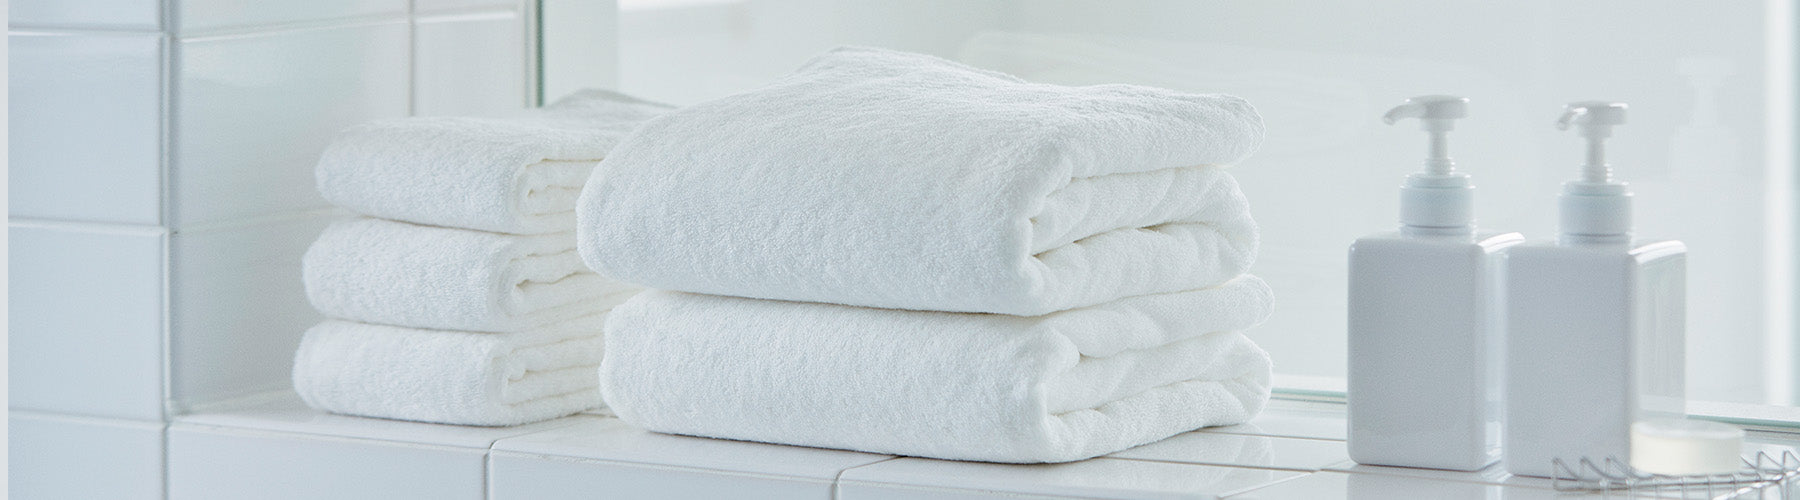 Bathroom Supplies- Towels & Accessories